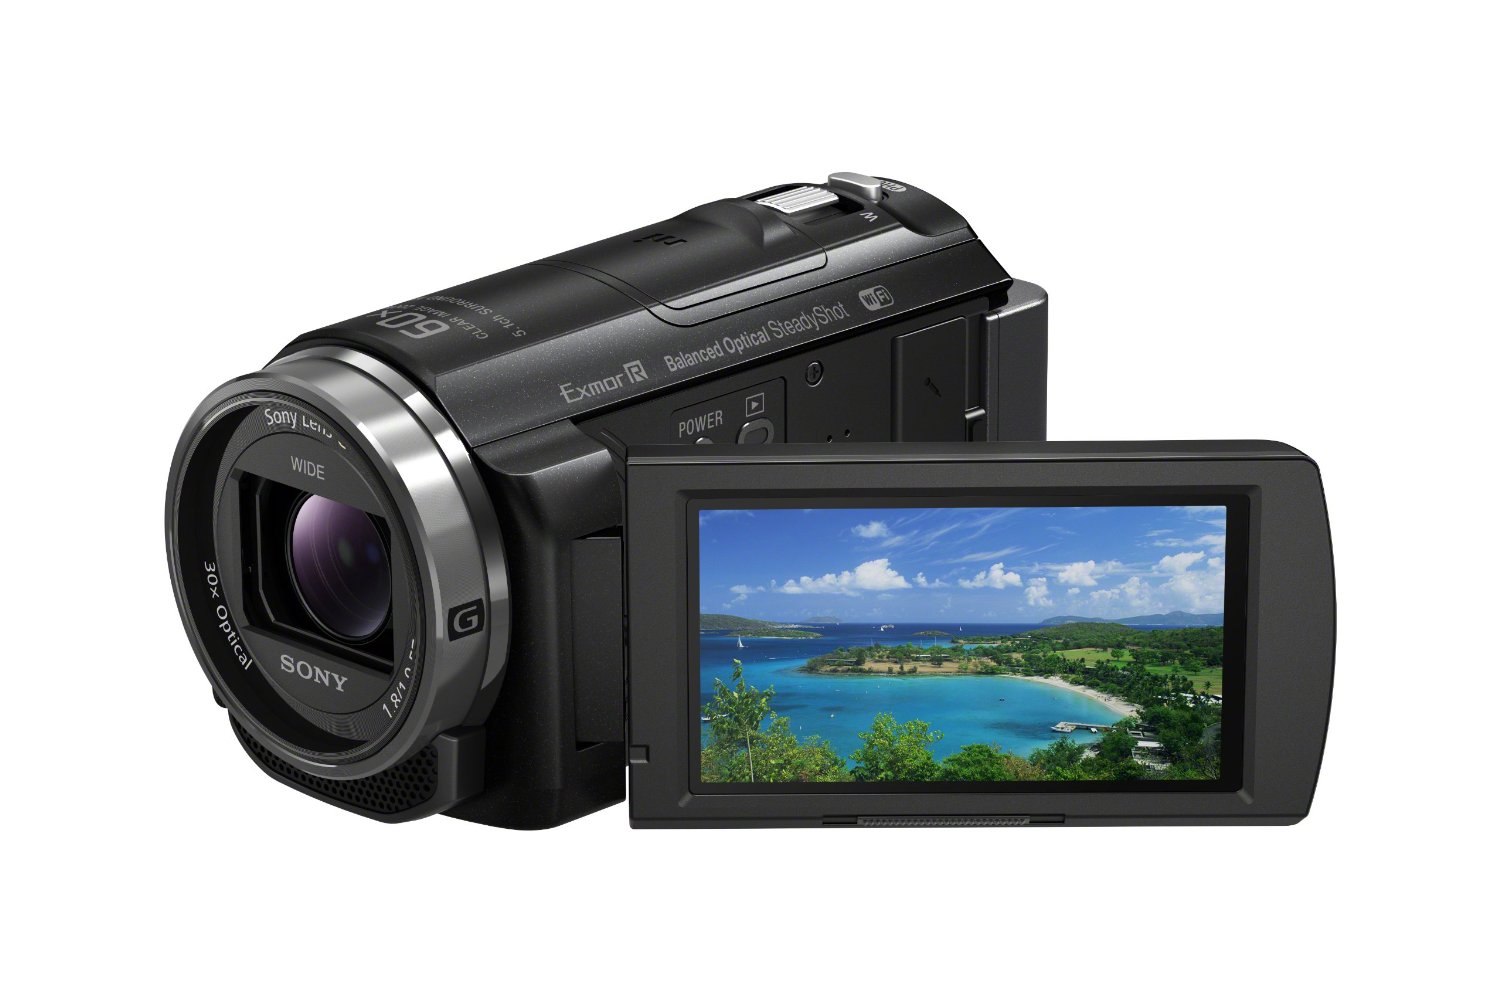 Sony HDRPJ540/B Video Camera with 3-Inch LCD (Negra)